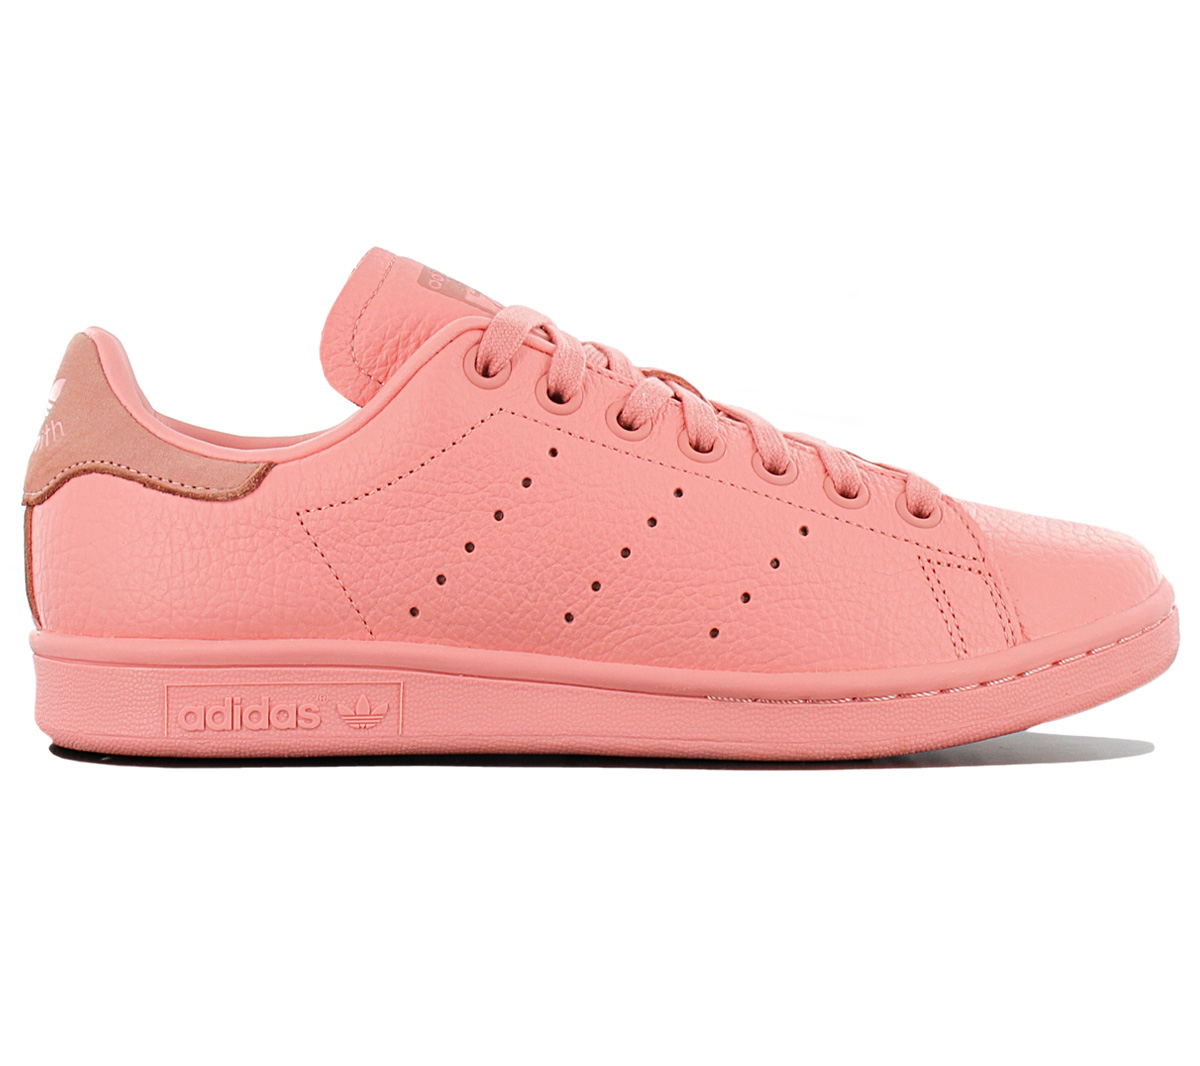 Adidas originals stan smith Women's Sneaker BZ0469 Leather Pink Shoes Shoe  New | eBay